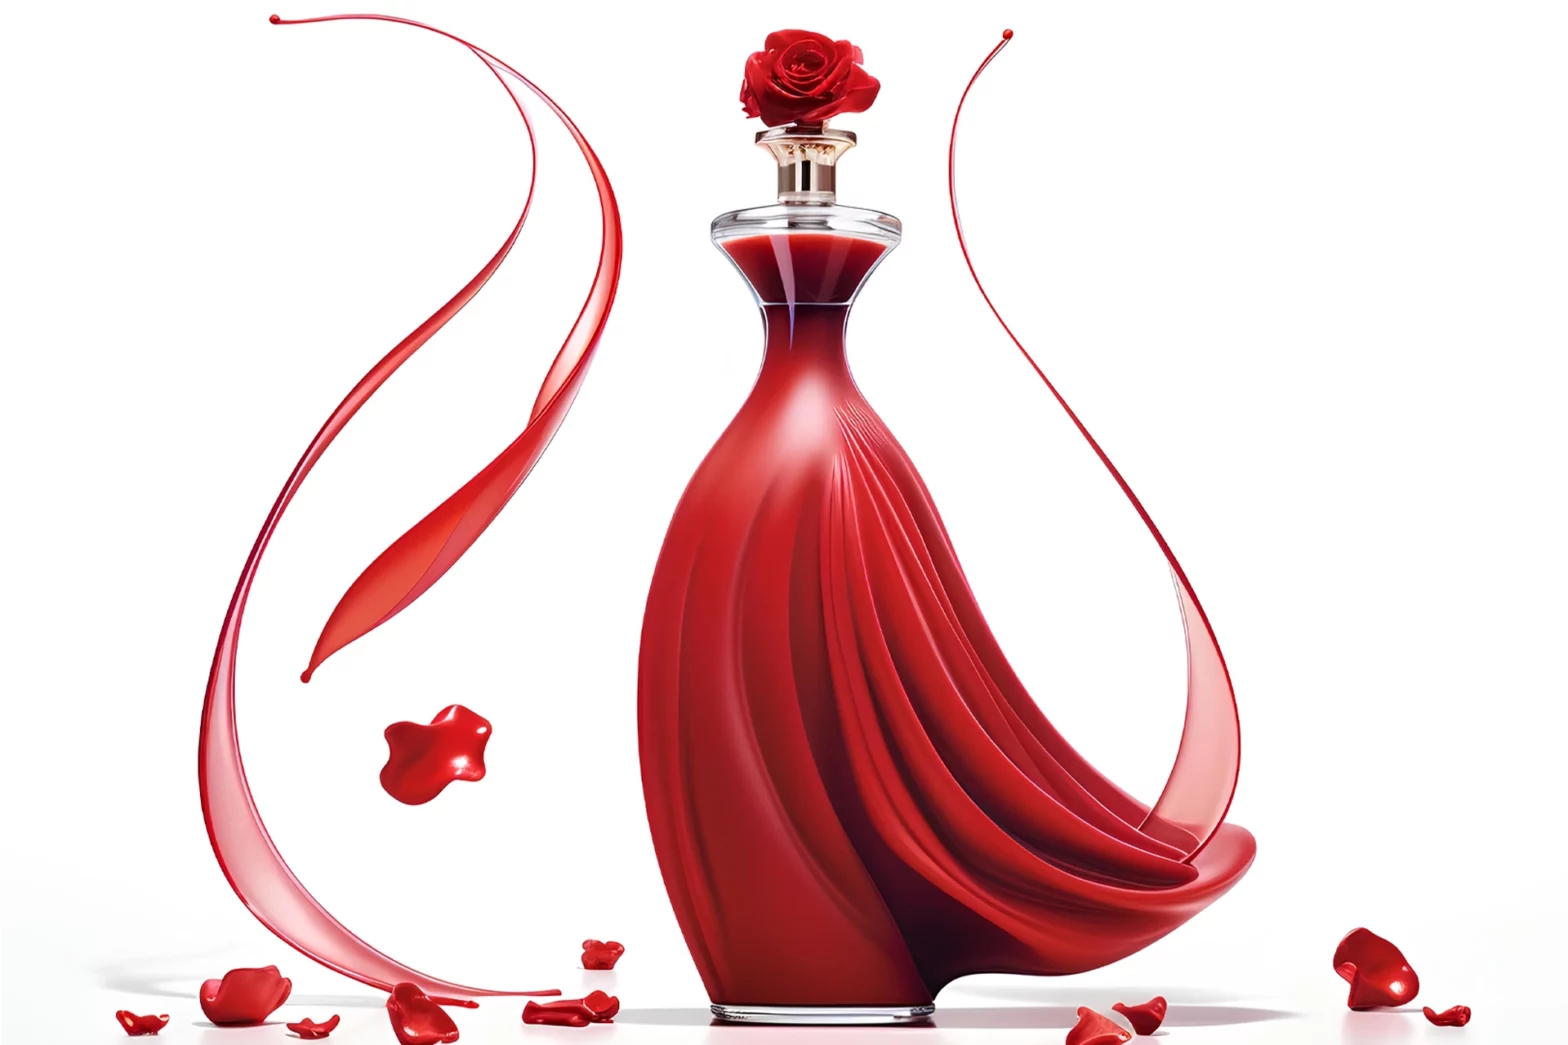 san valentin daring light perfumes niche barcelona 1 1568x1045 - NICHE PERFUMES FOR VALENTINE'S DAY